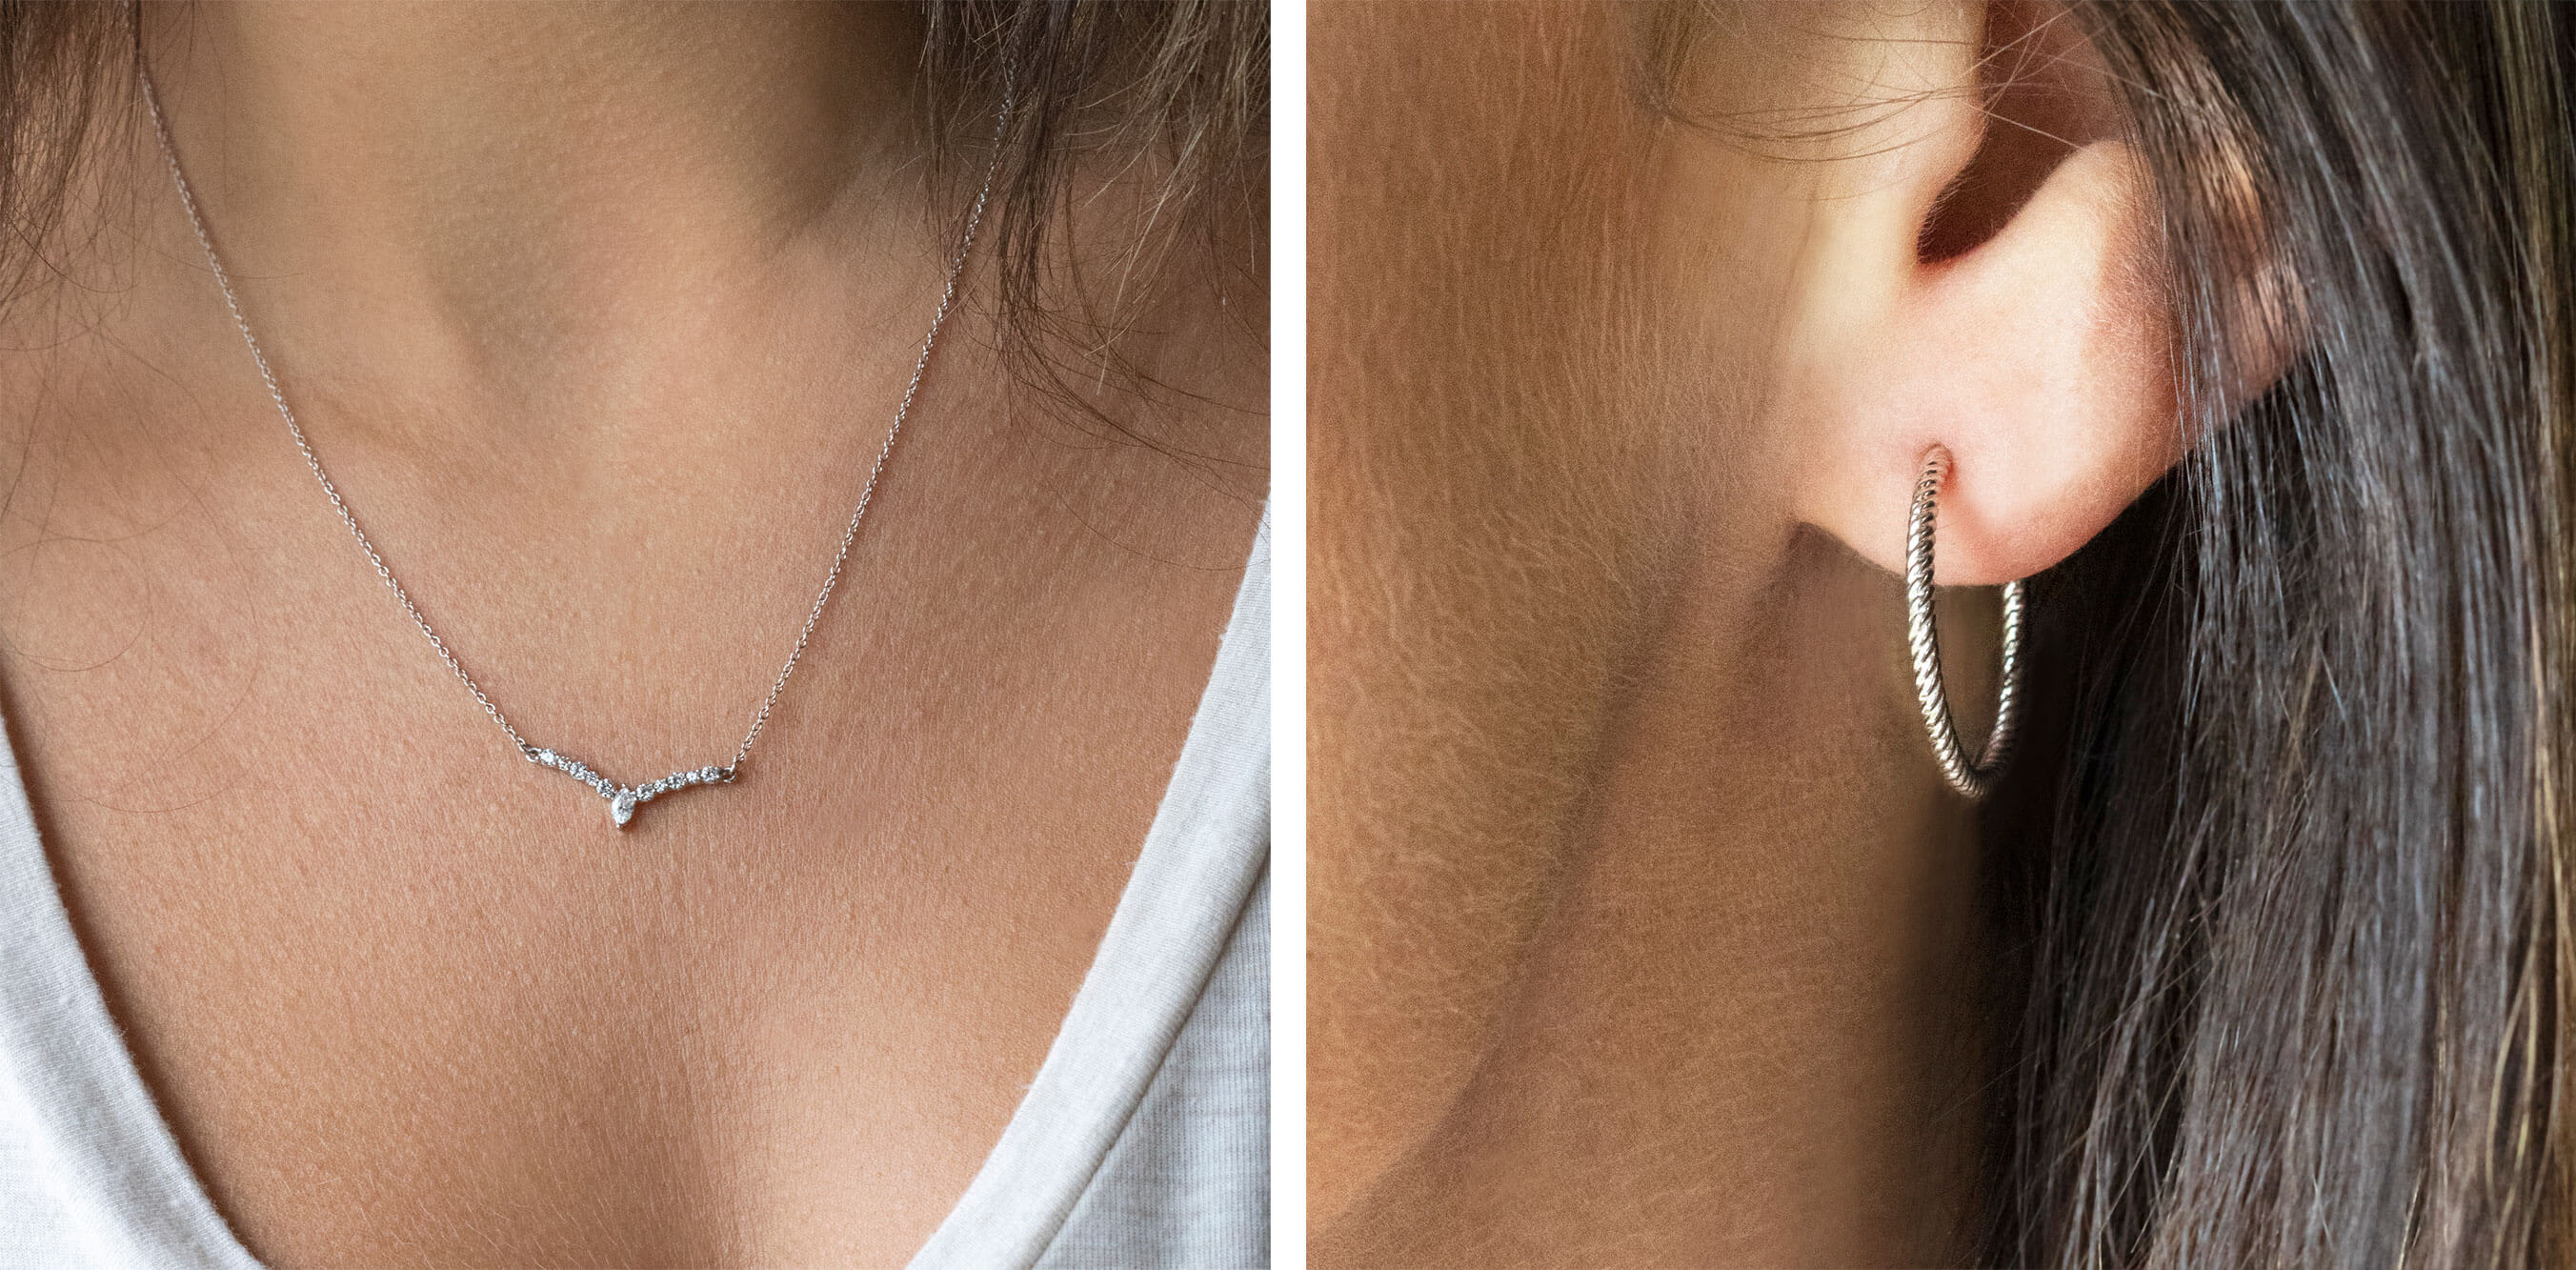 Laurel Necklace and Twisted Rope Hoop Earrings from Diamond Nexus.